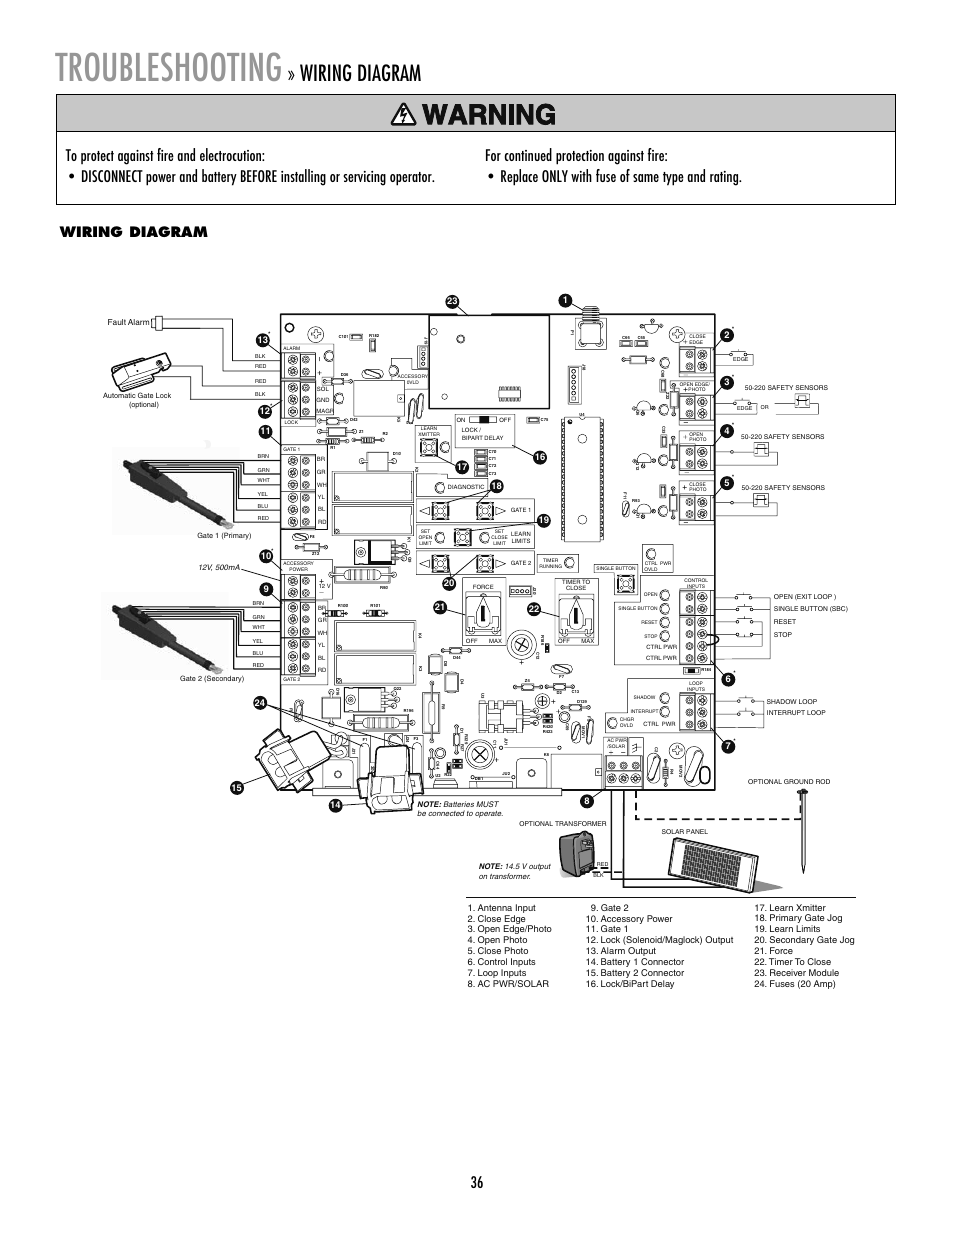 Troubleshooting, Wiring diagram | LiftMaster LA412 Solar Powered